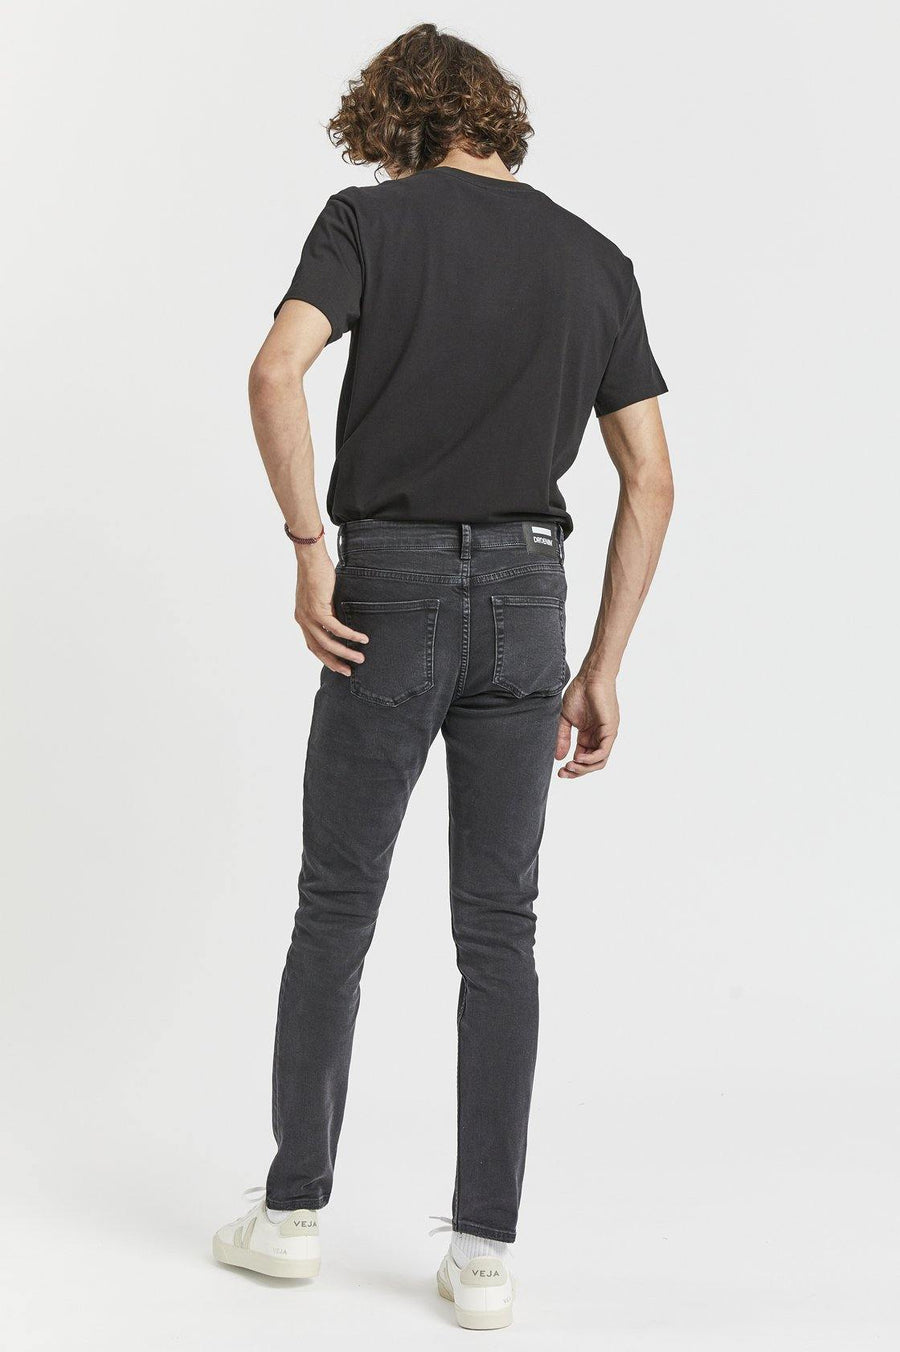 Chase Jeans - Greyish Black - Dr Denim Jeans - Australia & NZ